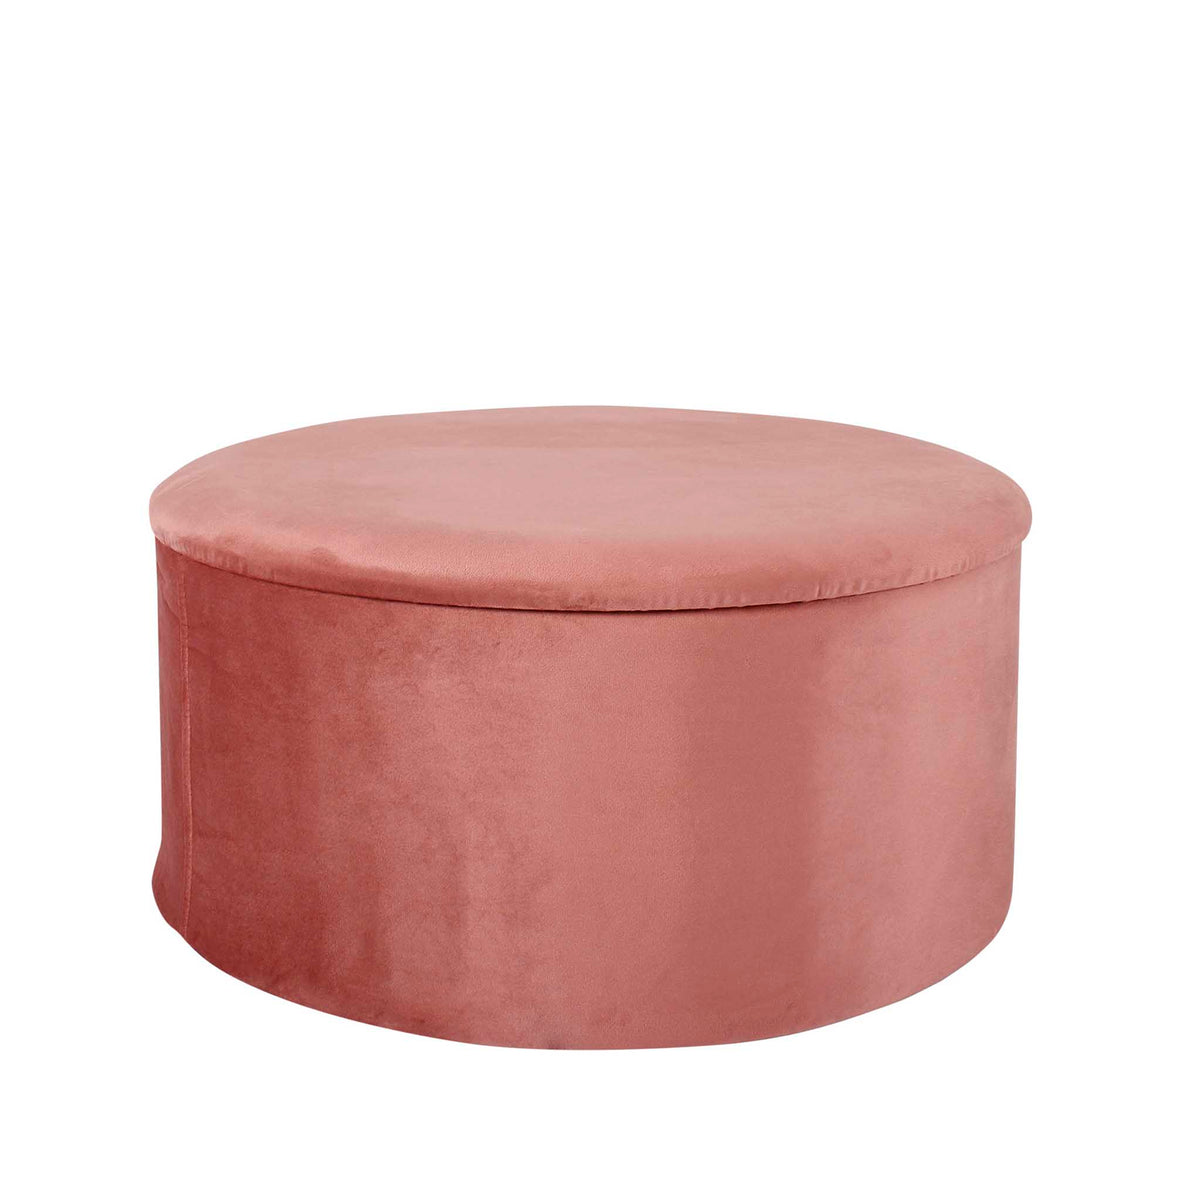 Mandy Pink Round Velvet Ottoman Storage Box from Roseland